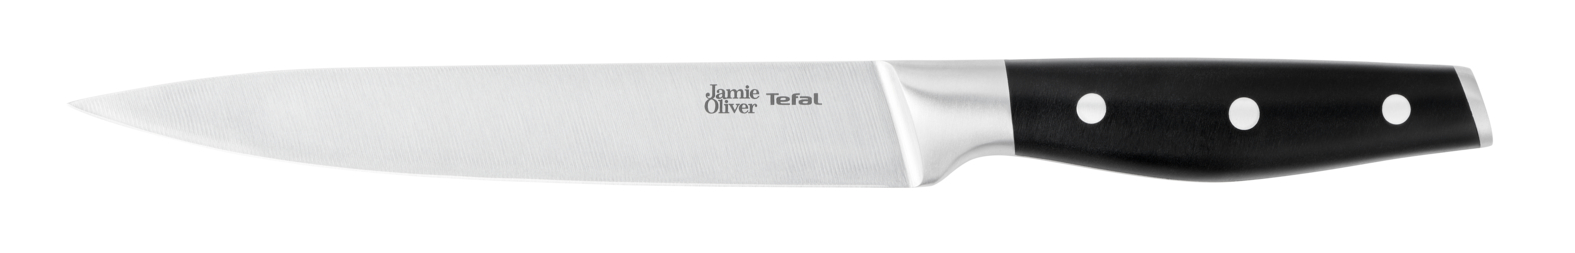 Универсальный нож Jamie Oliver 20 cм K2670244 шеф нож jamie oliver 20 см k2670144